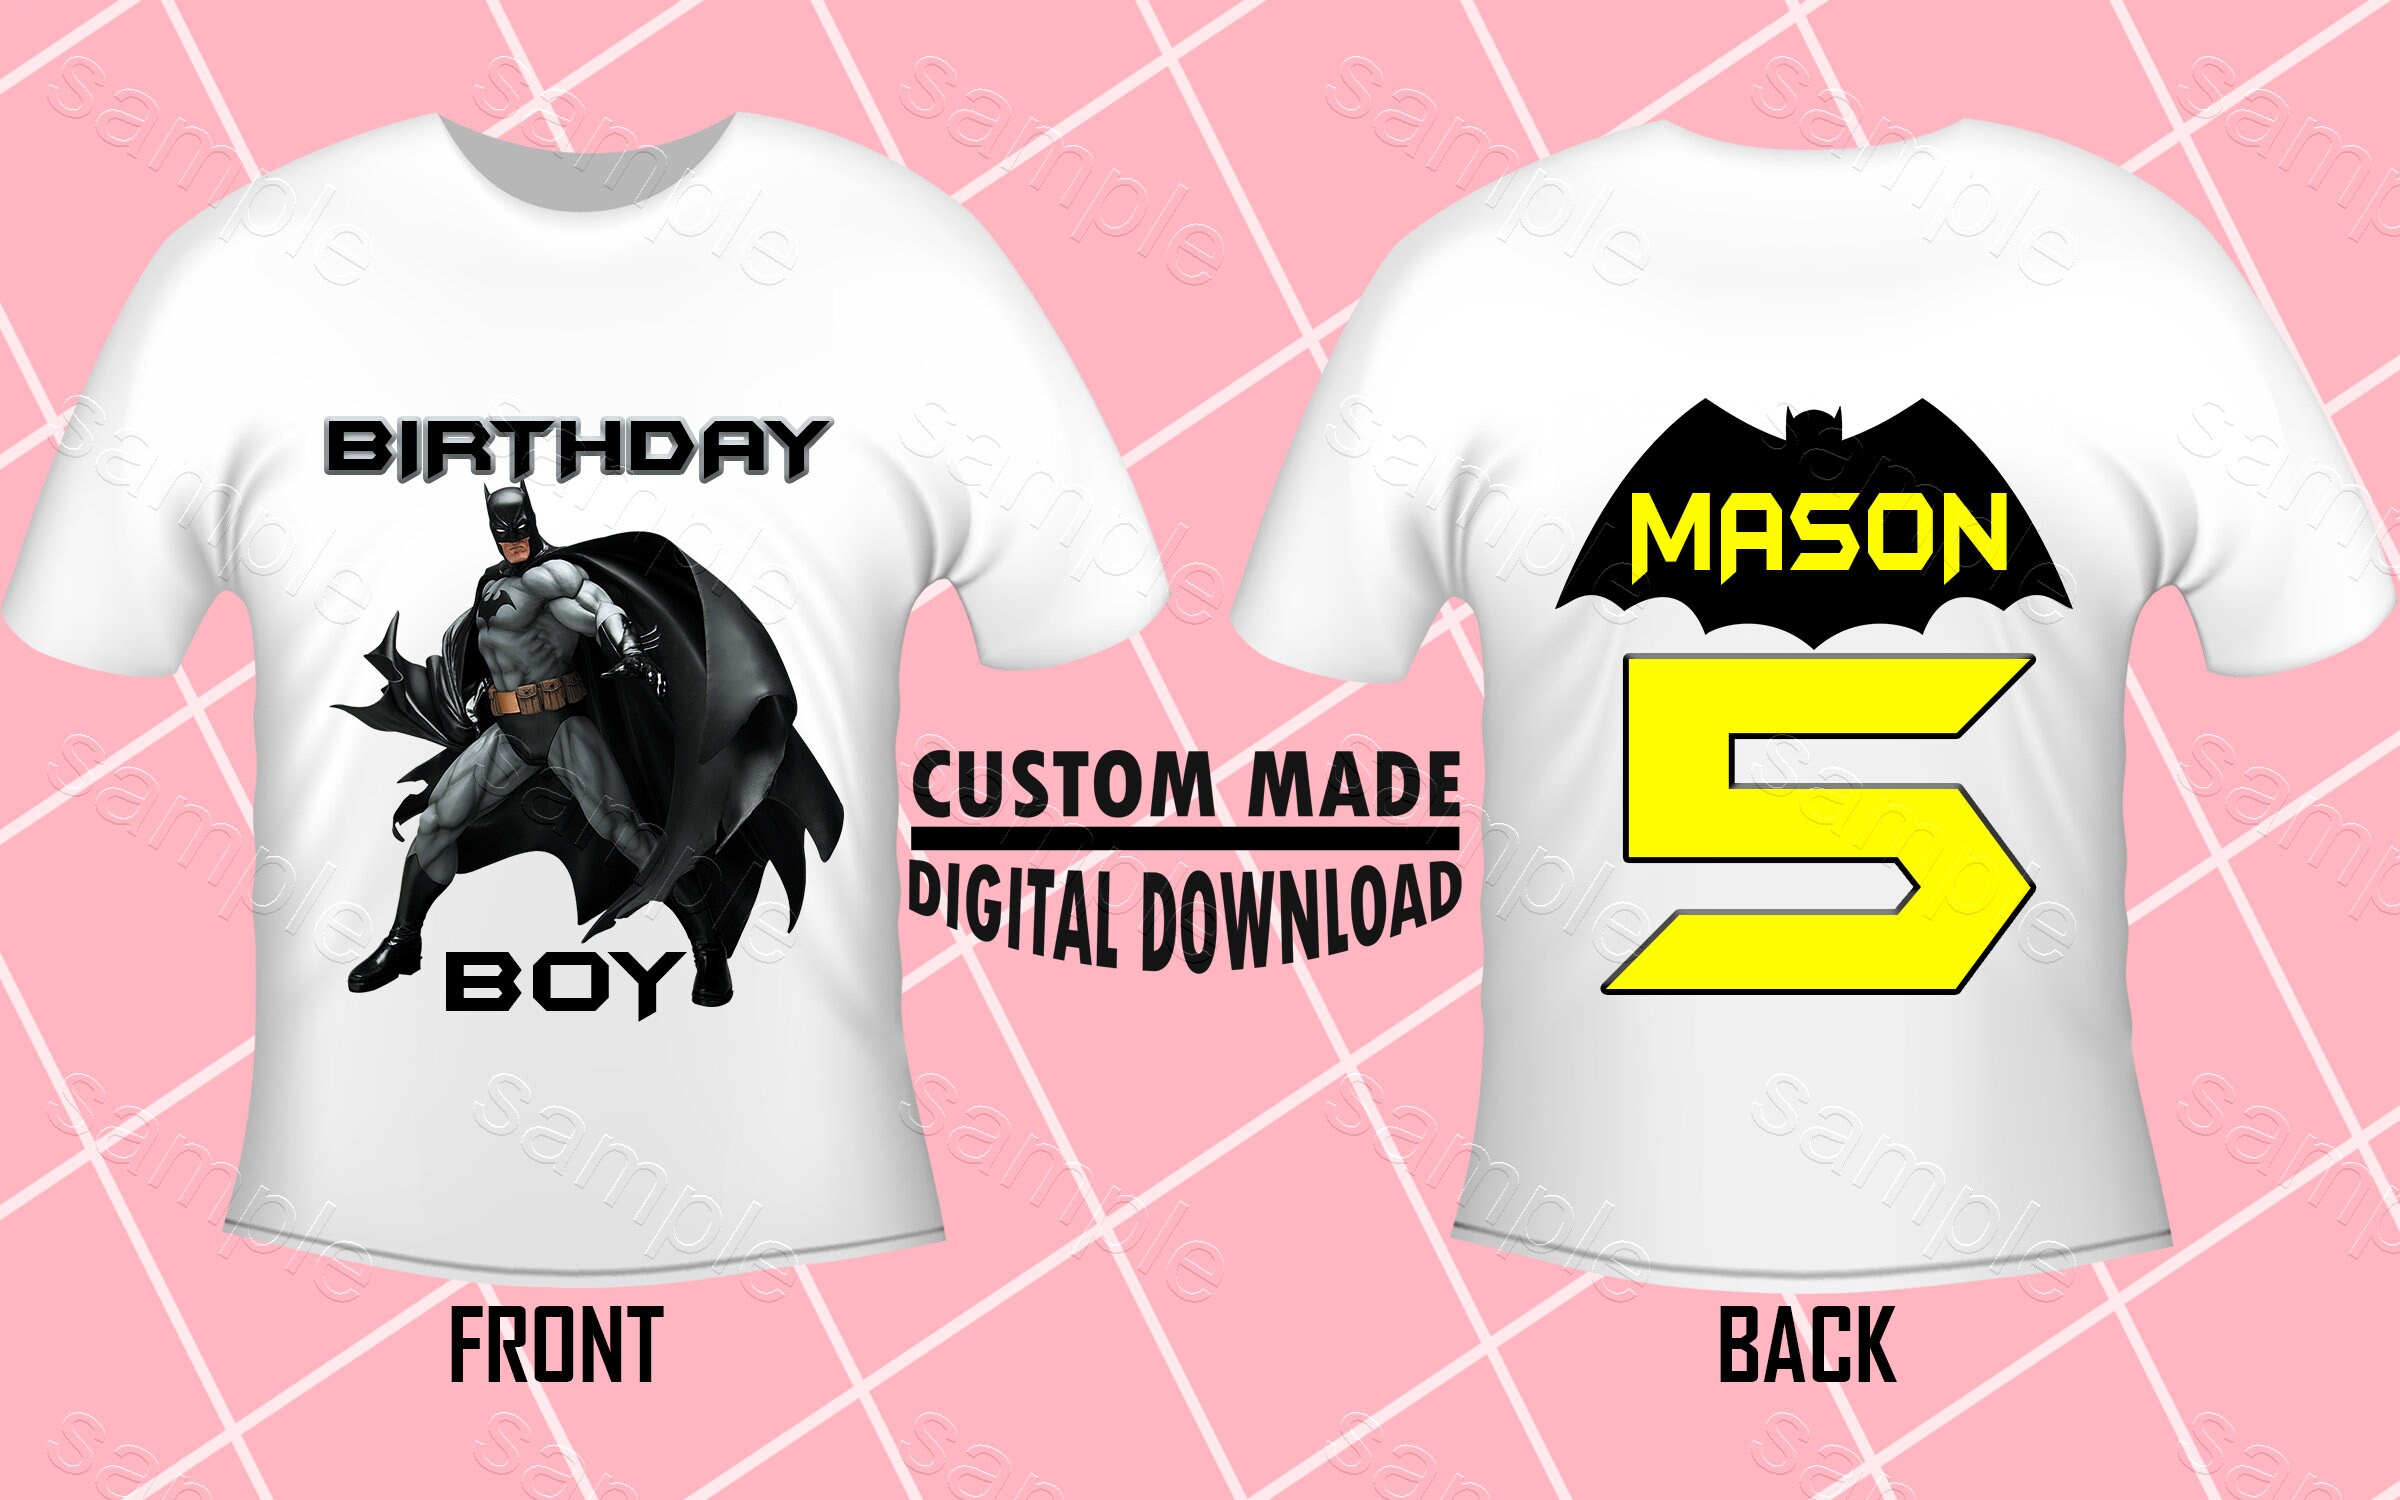 Batman Shirt Iron On Transfer Batman Birthday Shirt Iron On Etsy - roblox birthday shirt iron on transfer